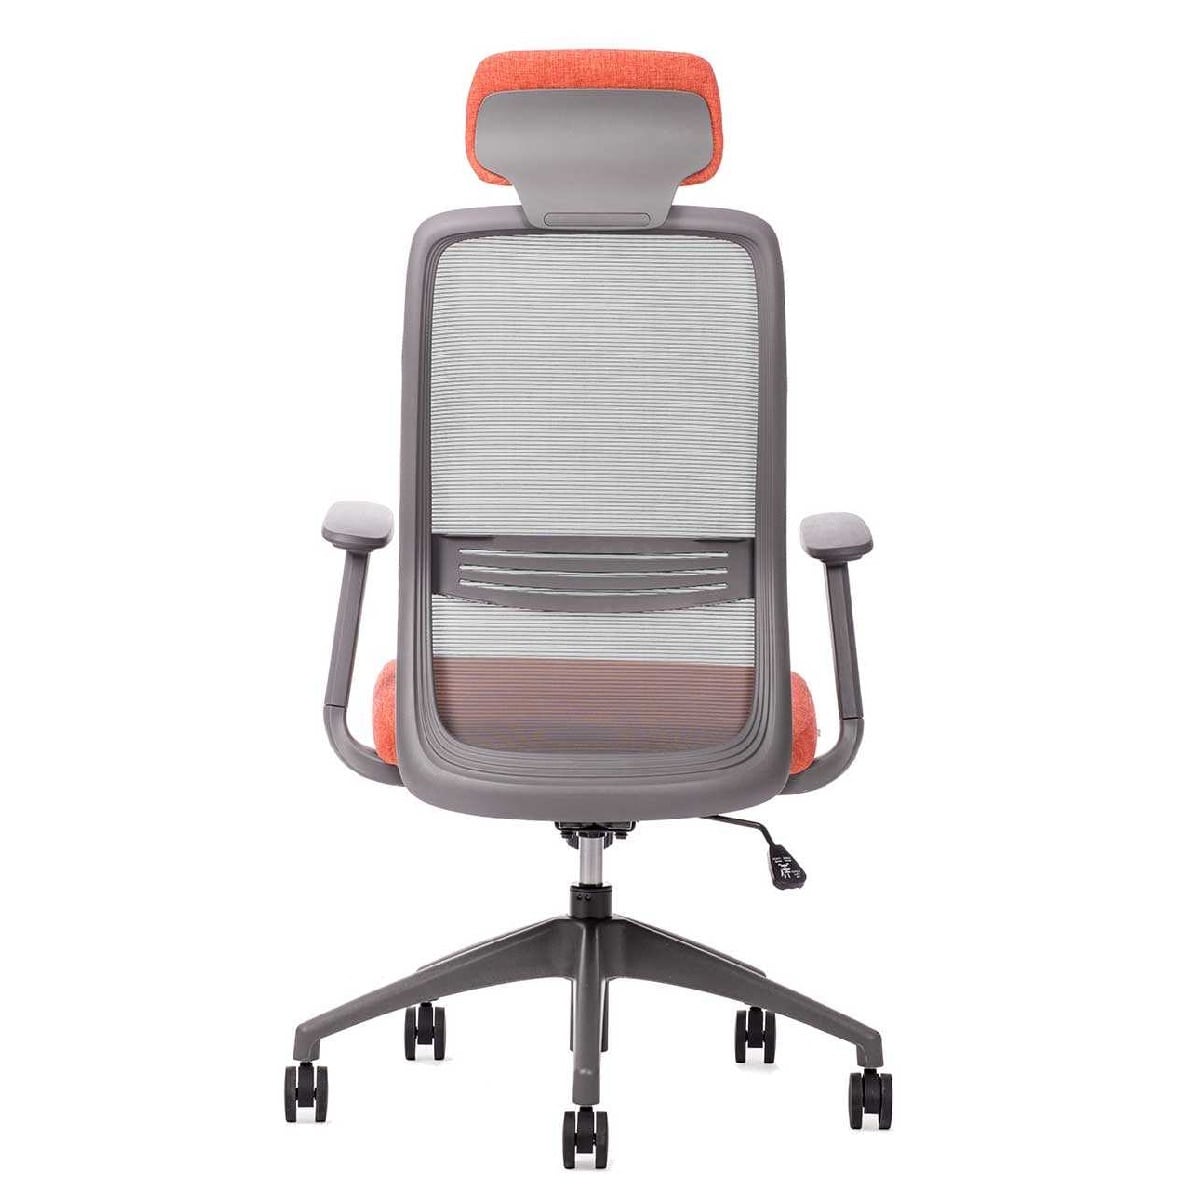 Sillón ejecutivo Evox respaldo alto tapizado en mesh  y asiento en piel con base nylon